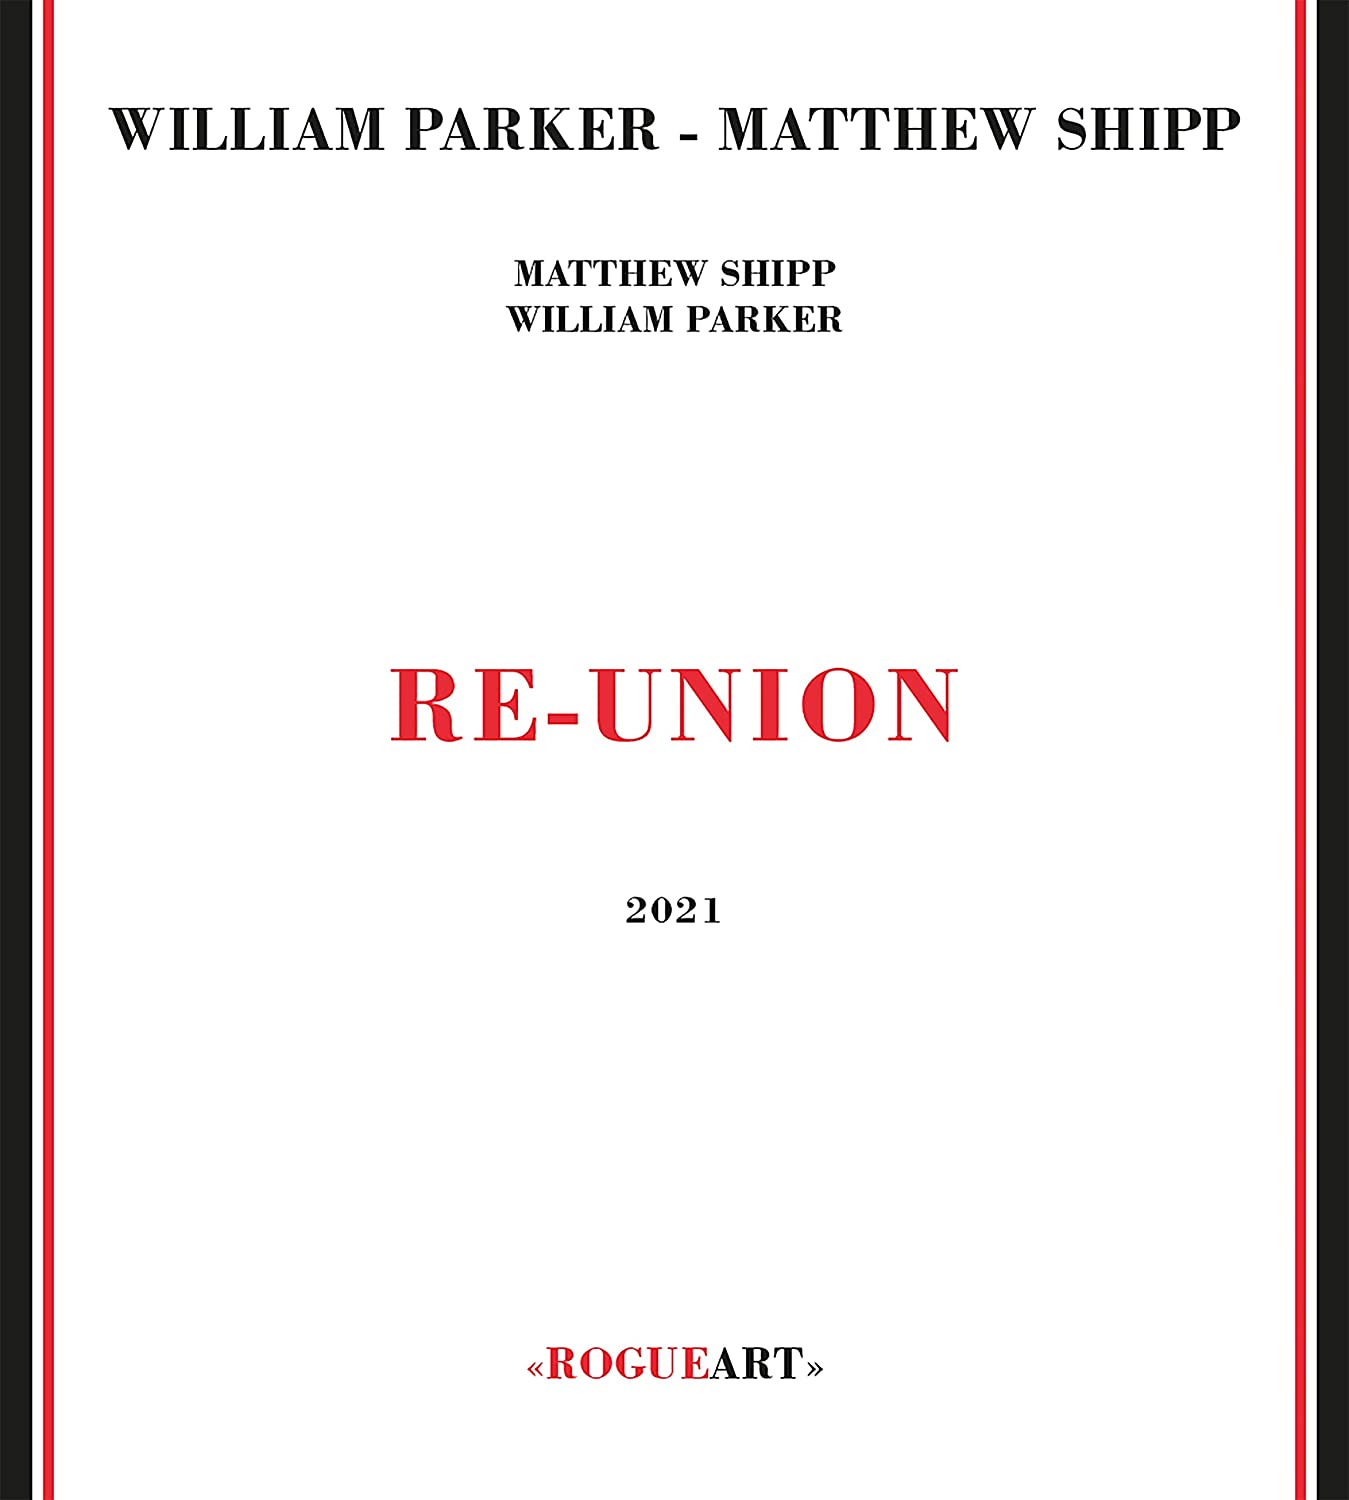 WILLIAM PARKER - William Parker - Matthew Shipp : Re-union cover 